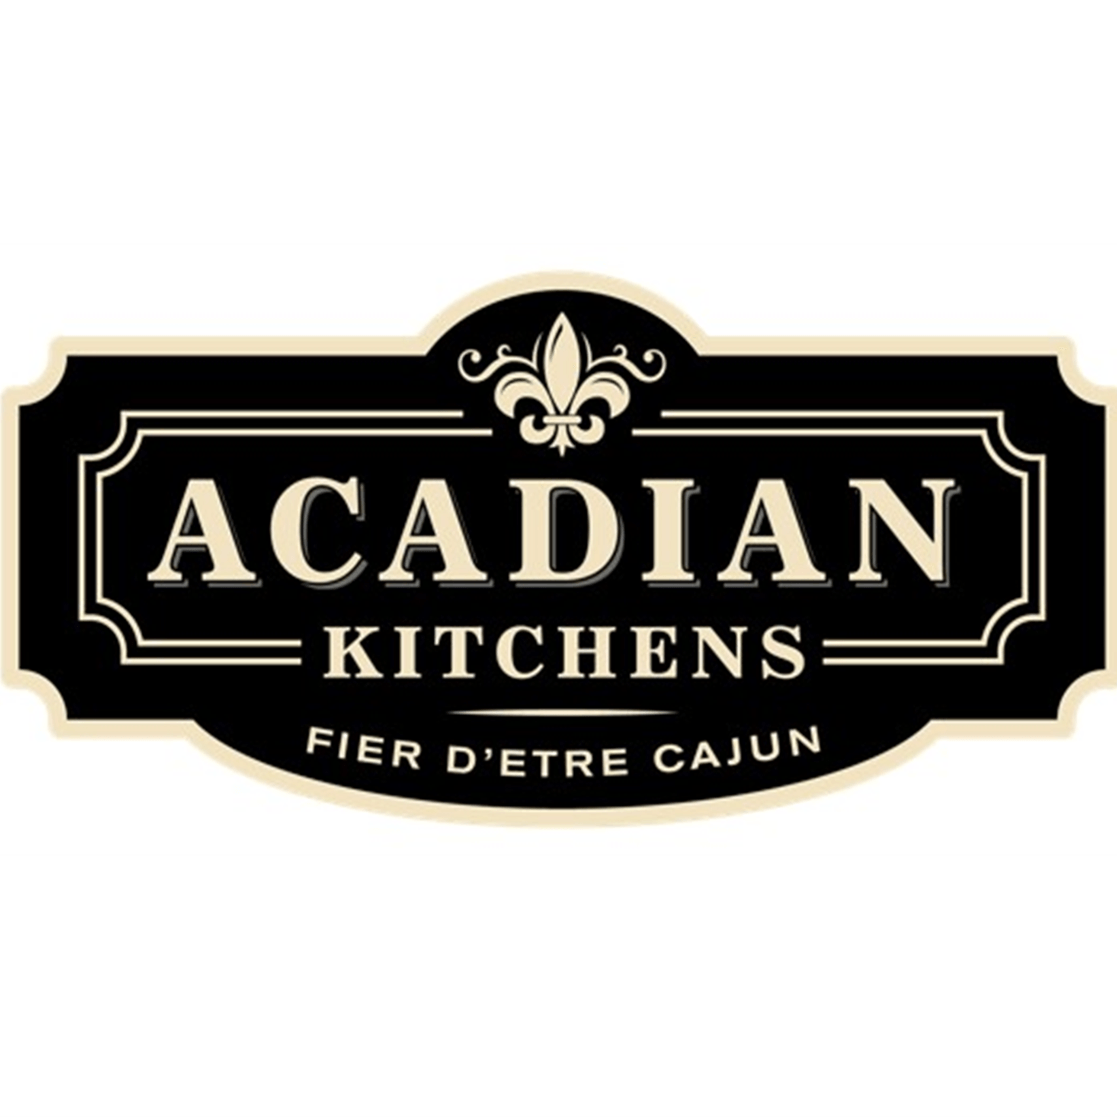 www.acadiankitchens.com